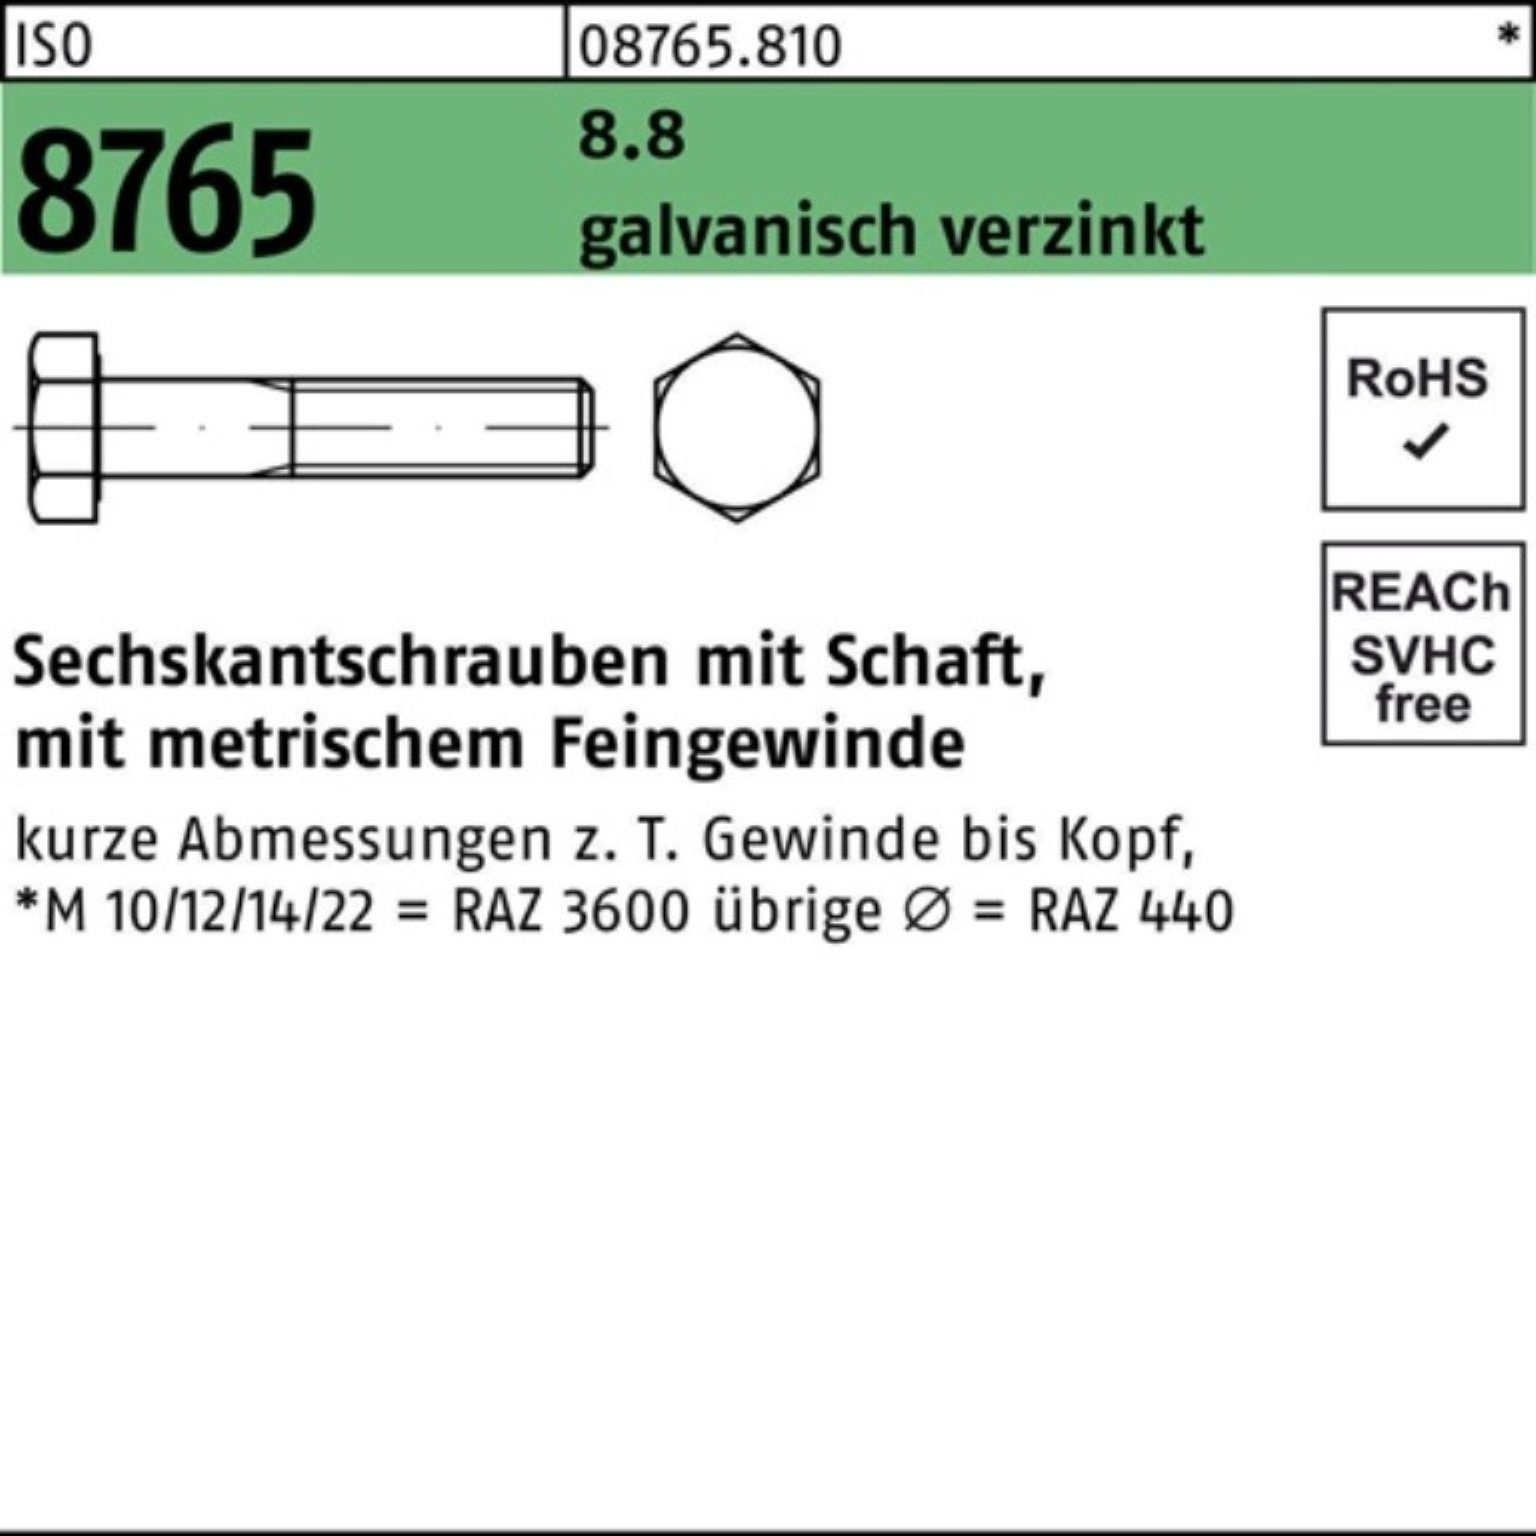 ISO Sechskantschraube galv.verz Pack Schaft M12x1,5x140 8765 8.8 Sechskantschraube 100er Reyher